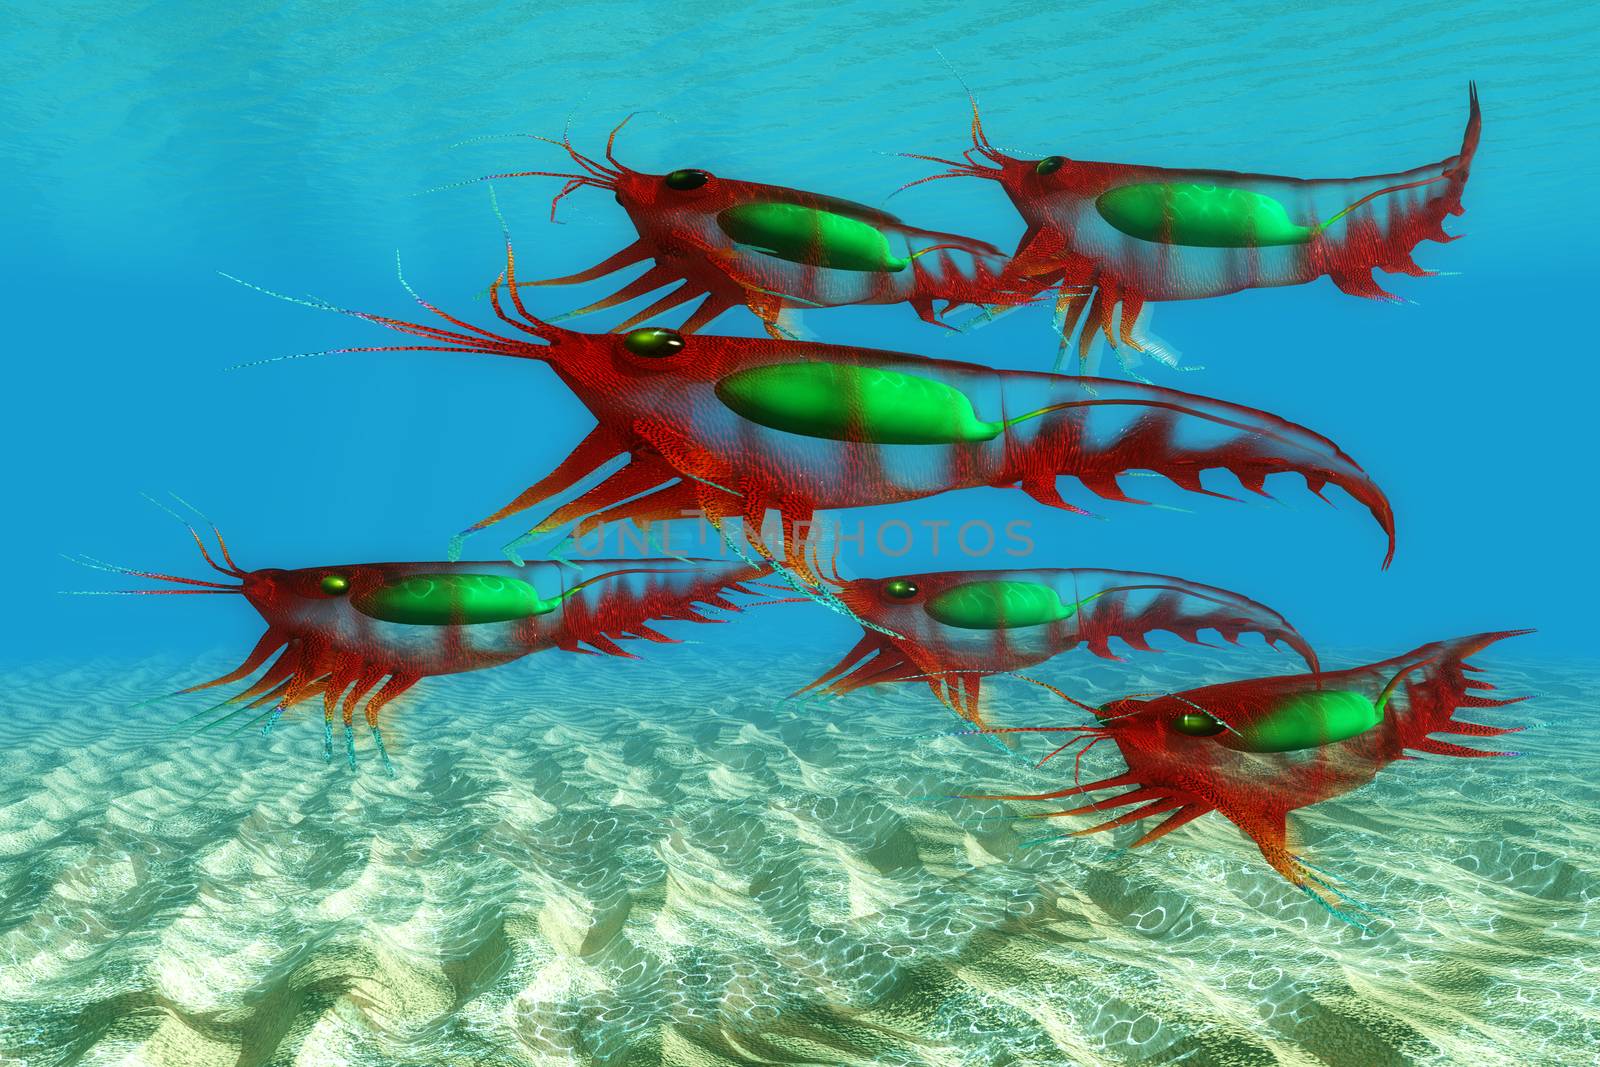 Ocean Krill Fish by Catmando